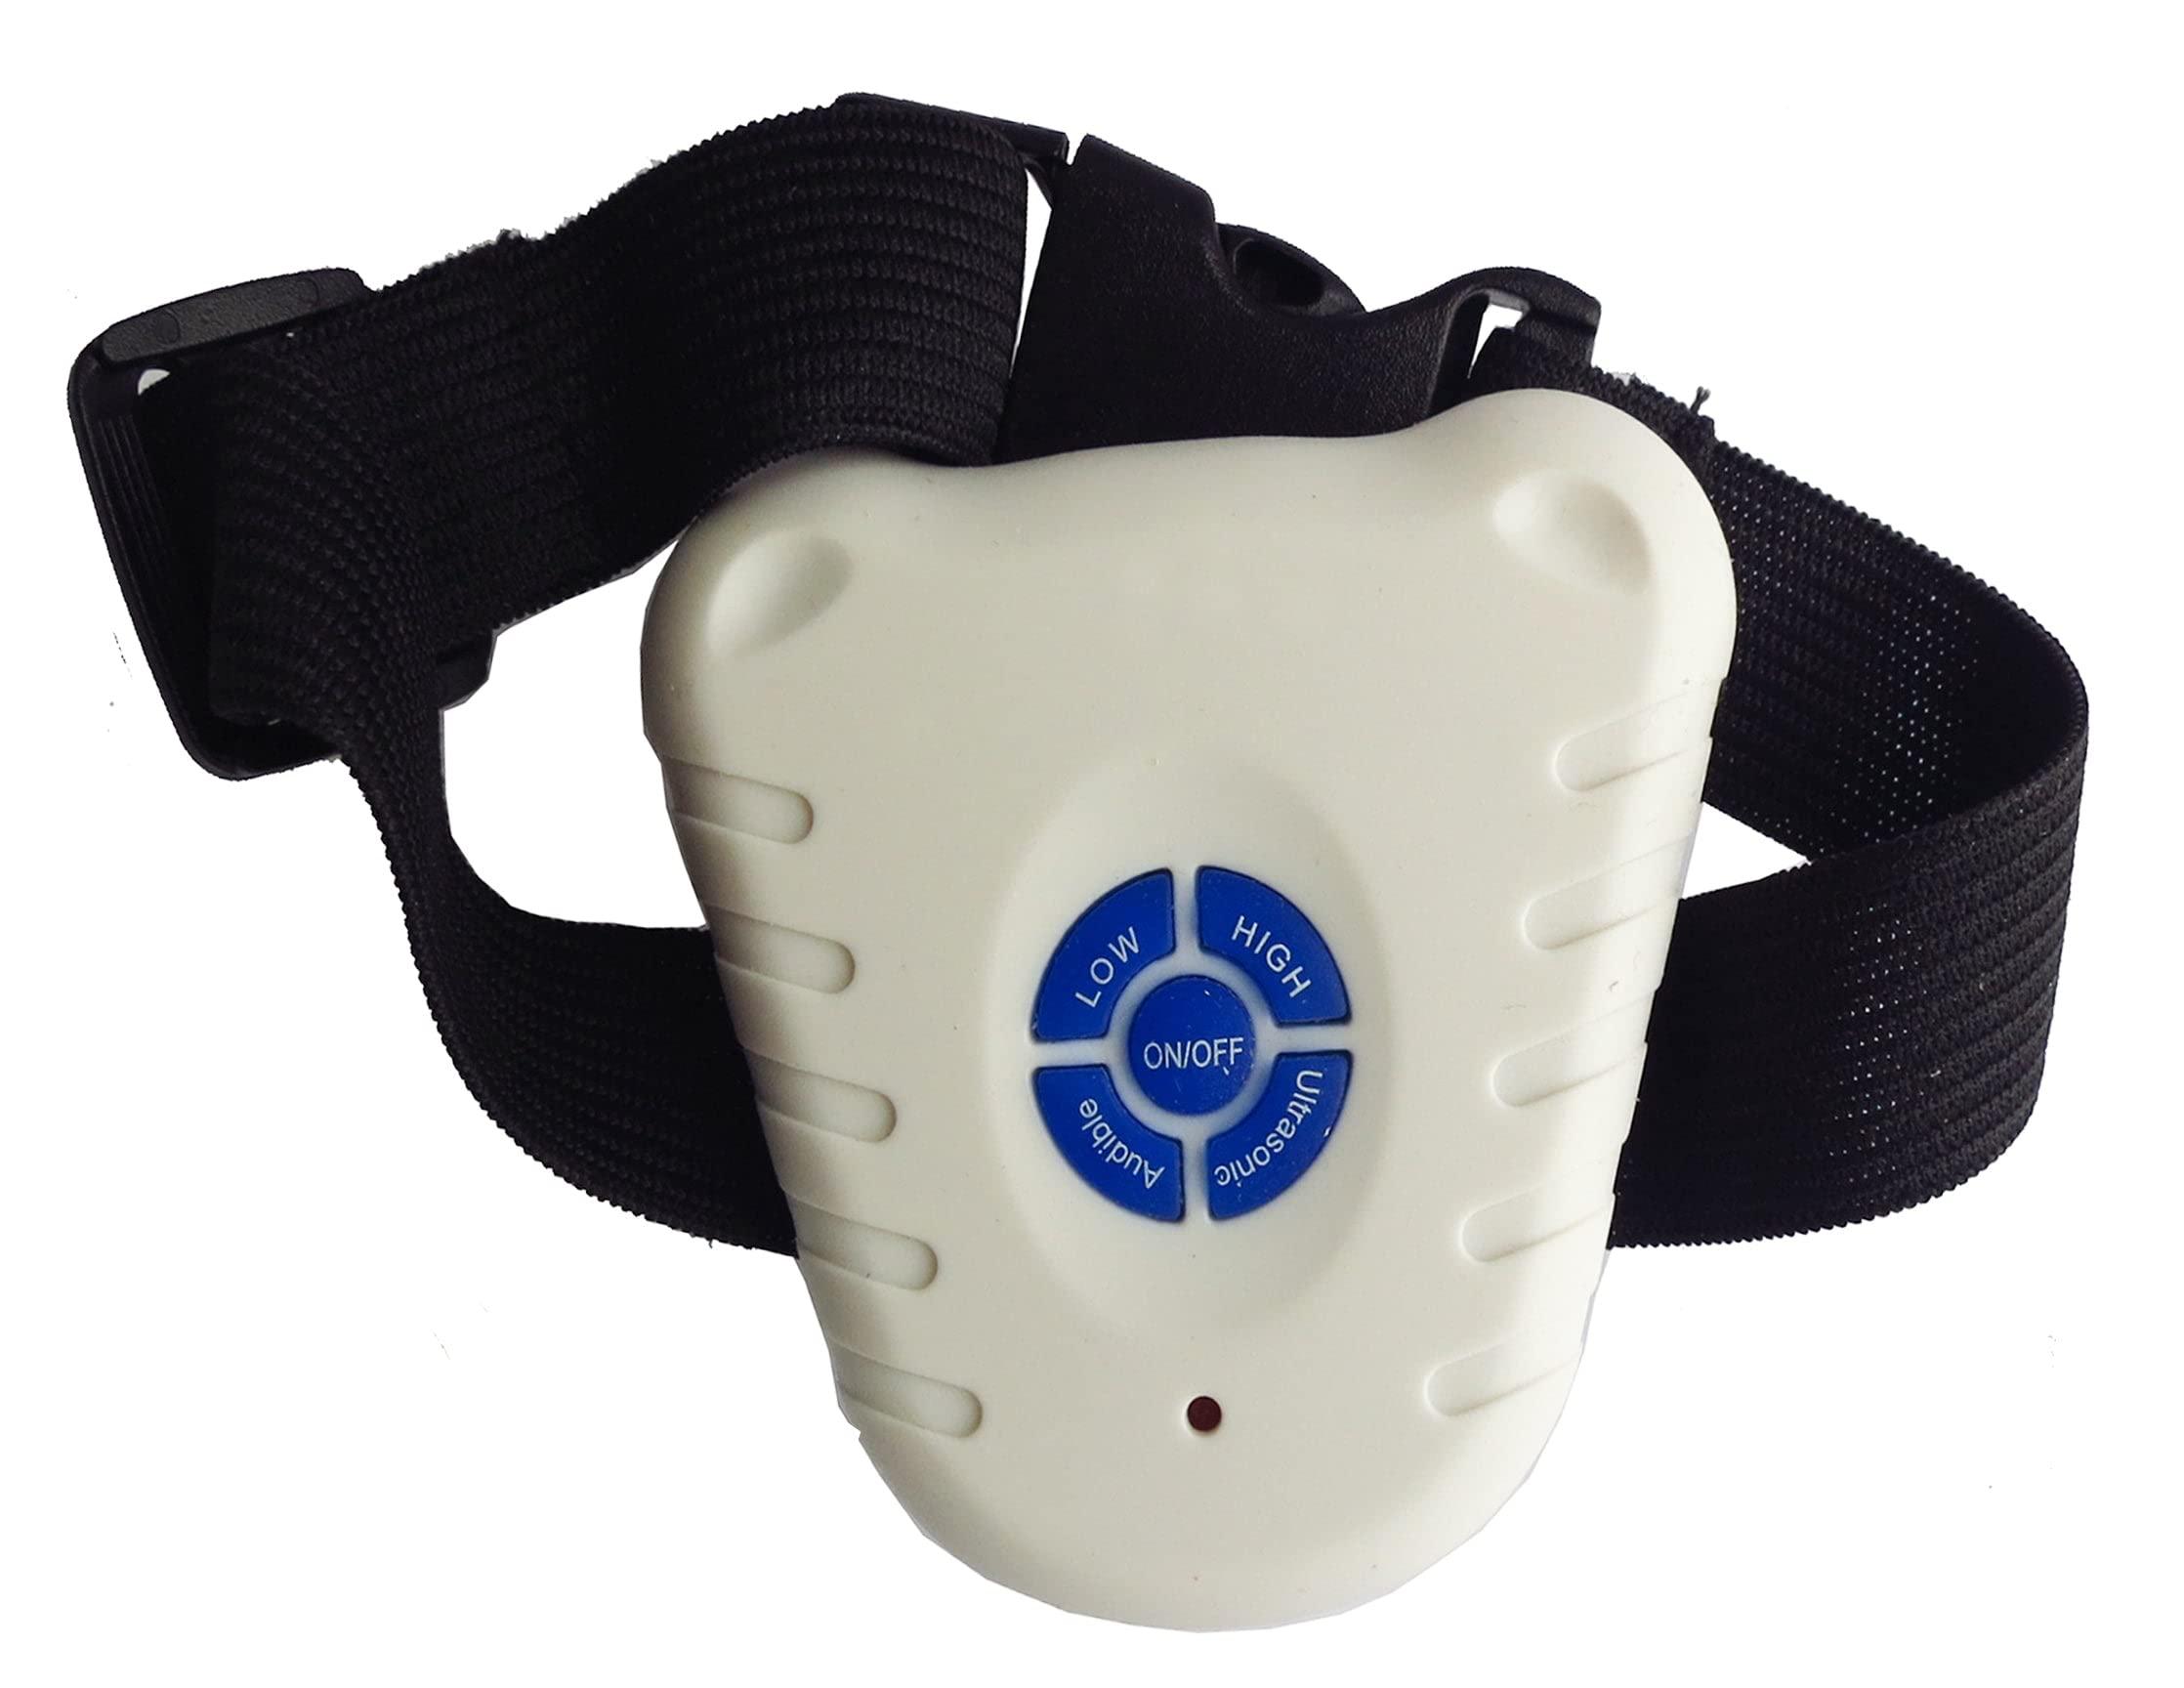 PET LIFE Aniti-Shock Waterproof Safe Anti-Bark Training Collar Trainer, White